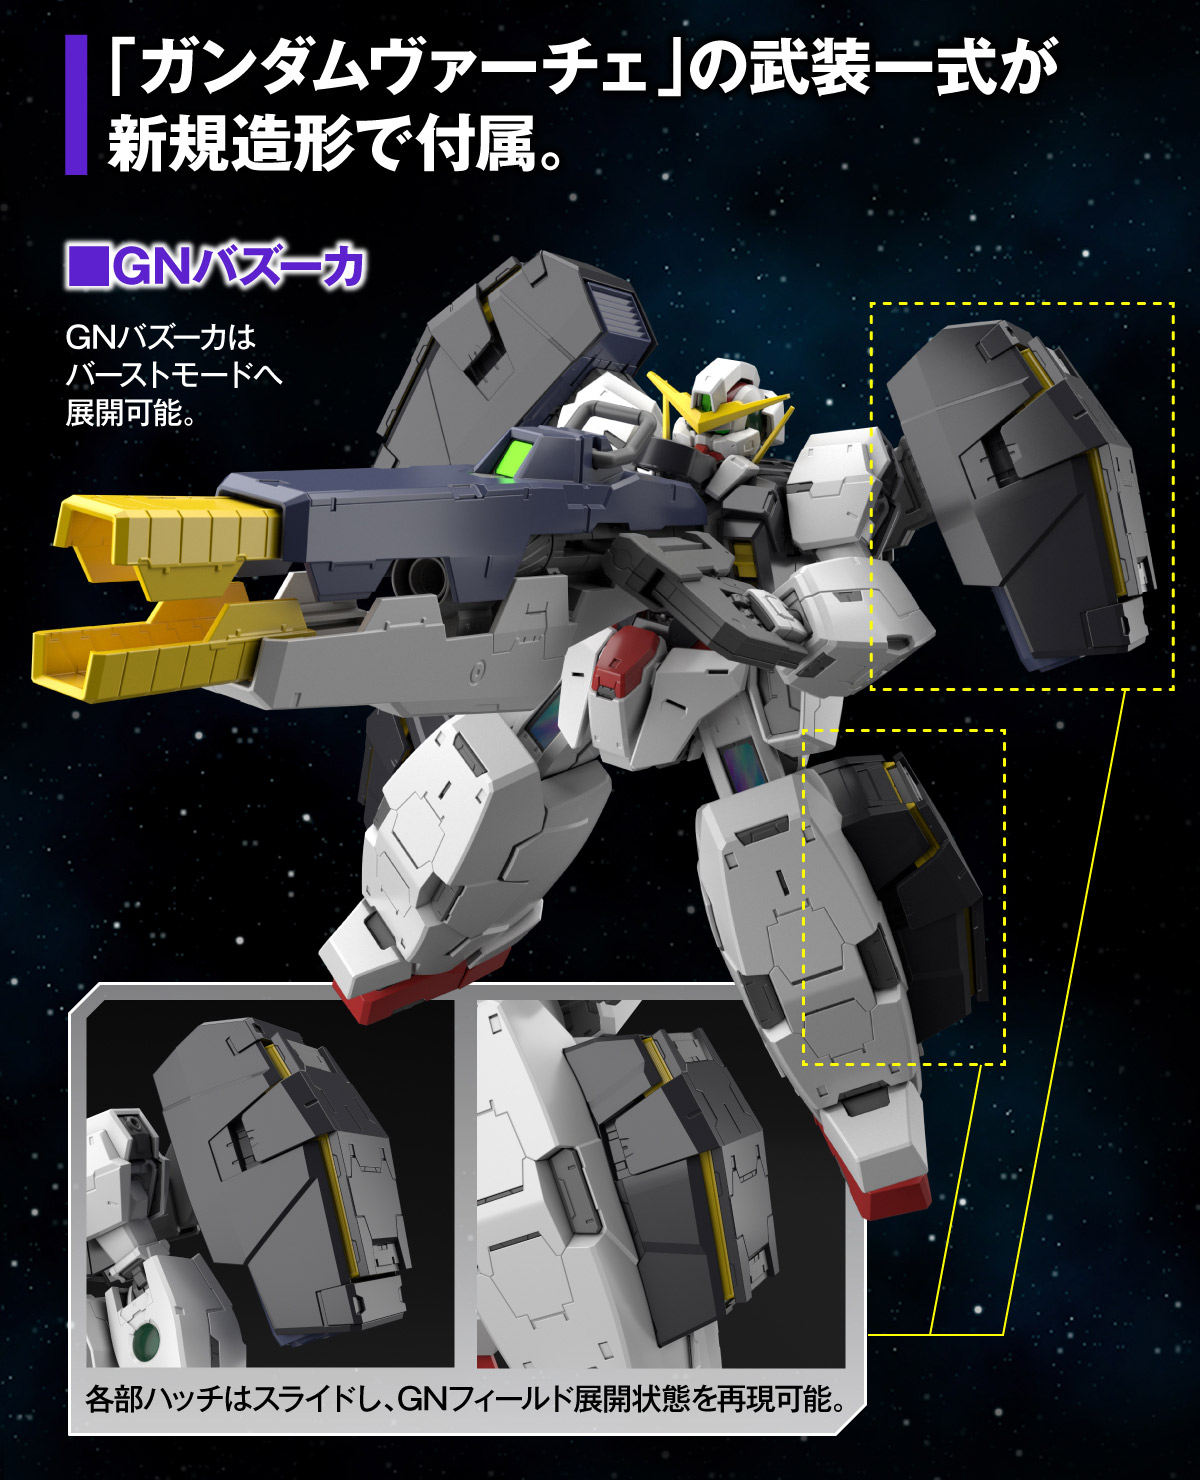 MG 1/100 GN-005 Gundam Virtue & GN-004 Gundam Nadleeh in Hobby Next Phase Spring 2021